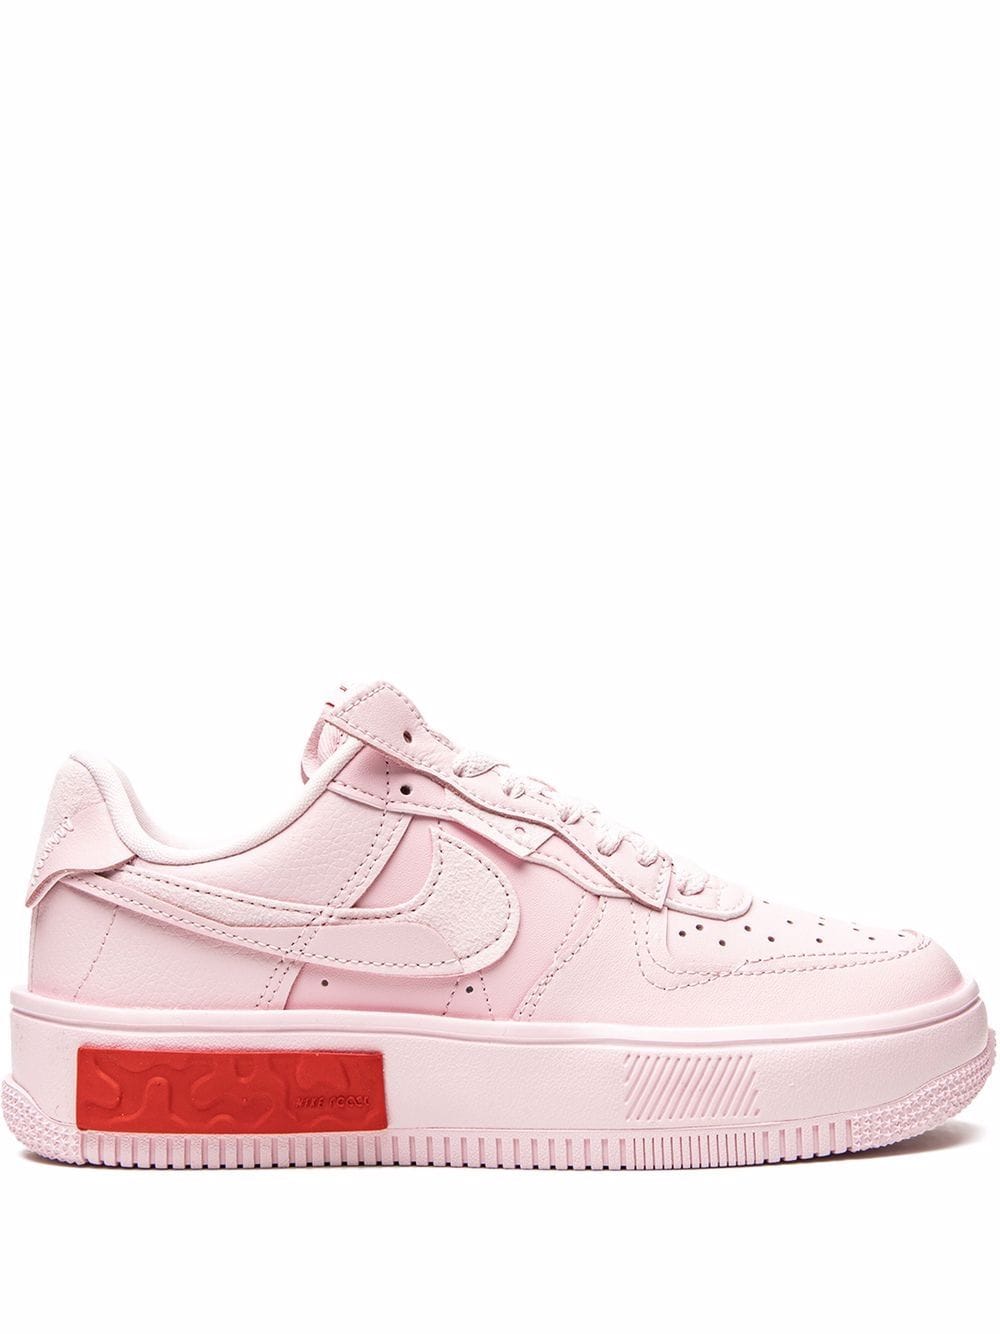 Women's Air Force 1 Fontanka Pink Foam Sneaker Review QuickSchopes 220  Schopes DA7024 600 Rose 